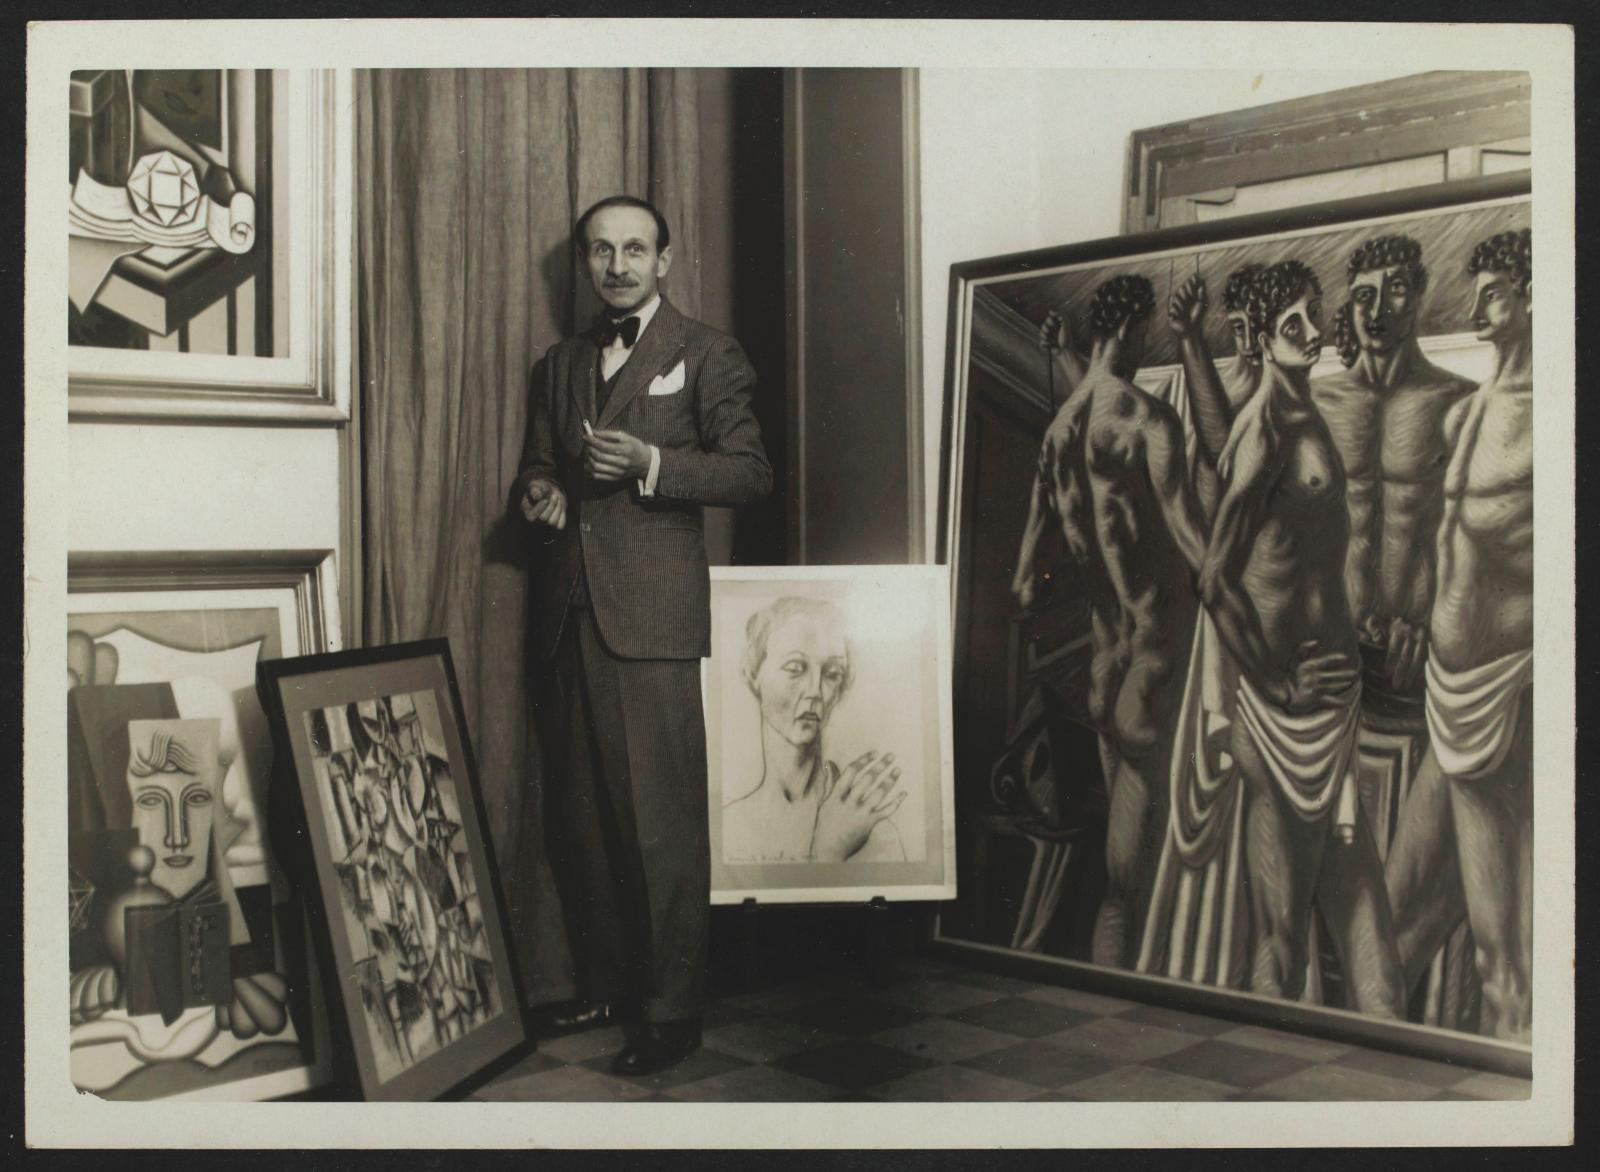  Léonce Rosenberg, Disgraced Avant-Garde Gallerist